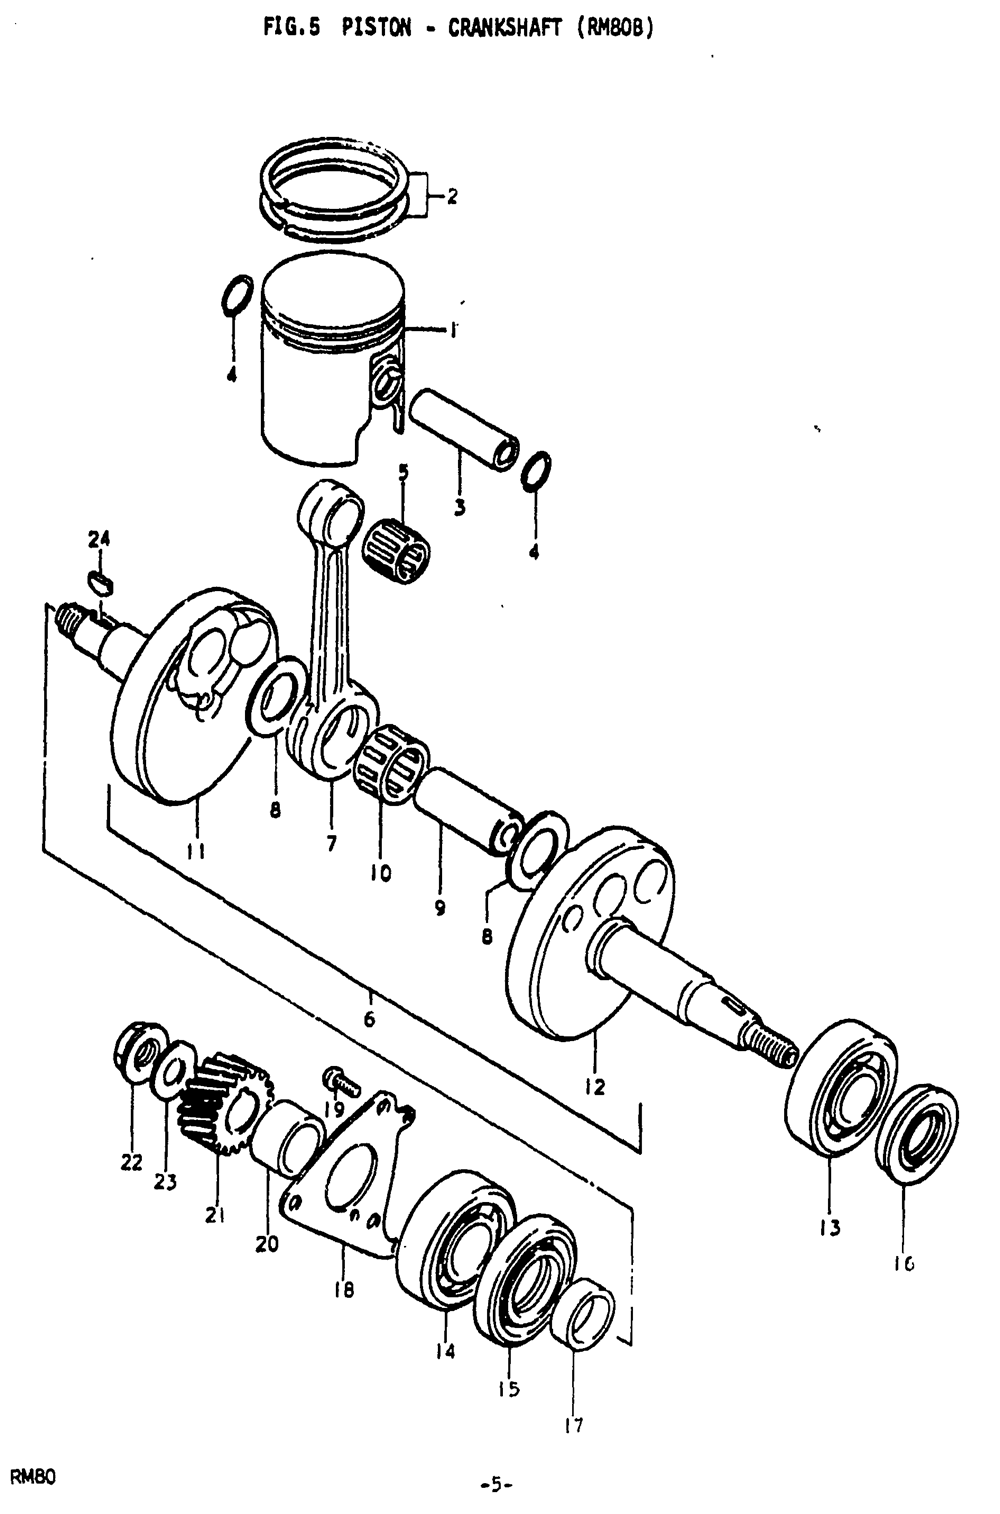 Piston - crankshaft (rm80b)